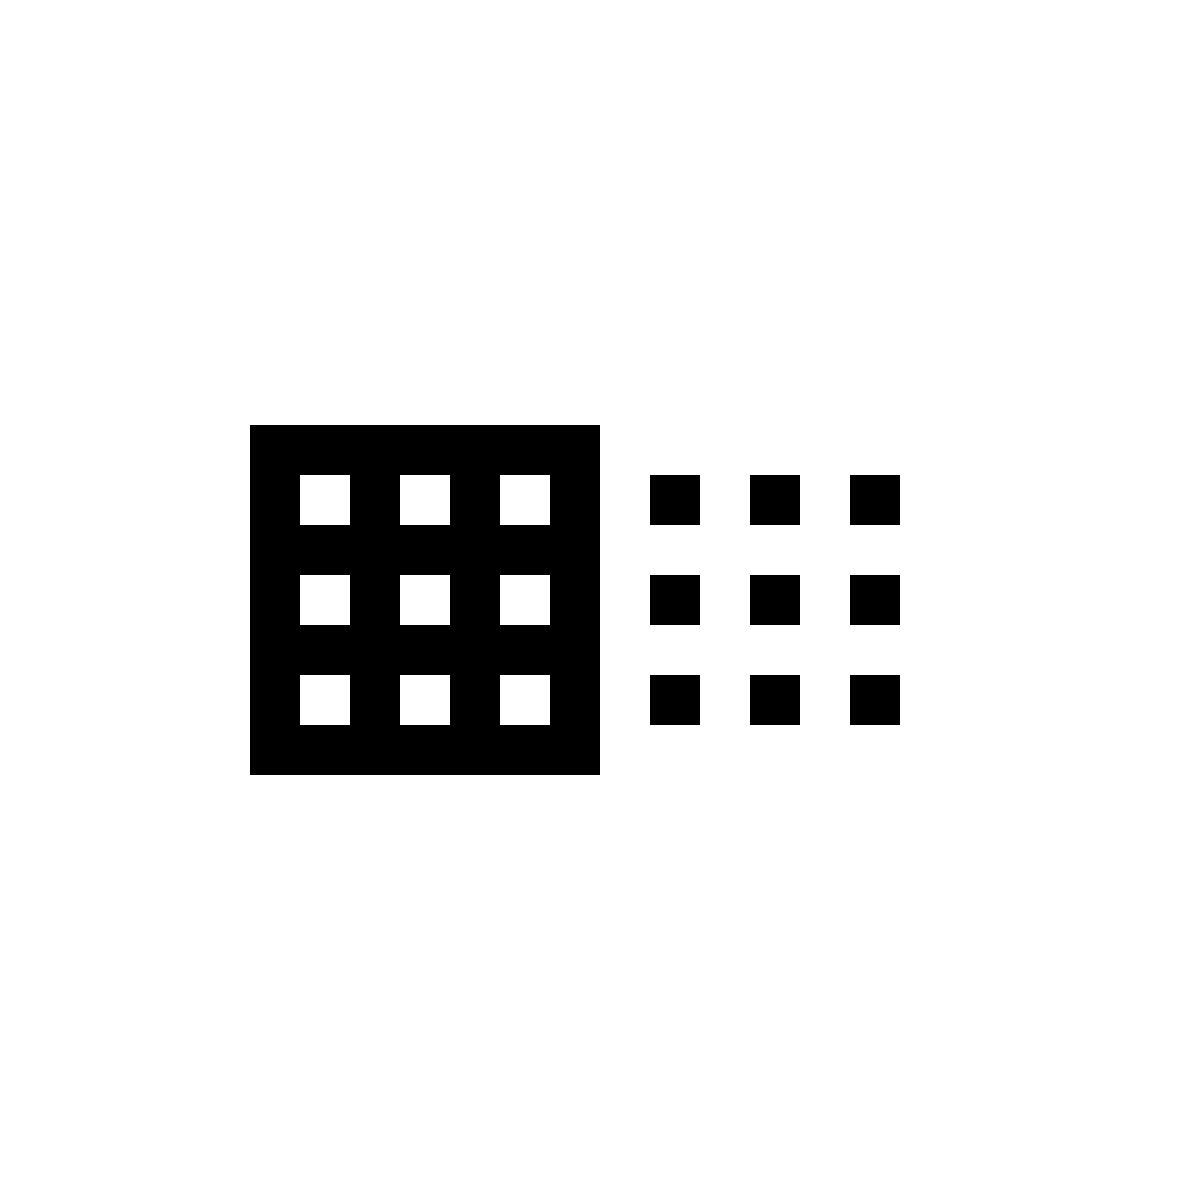 Minimalvision 38 – Small plaid, Geometry, Minimal, Drawing